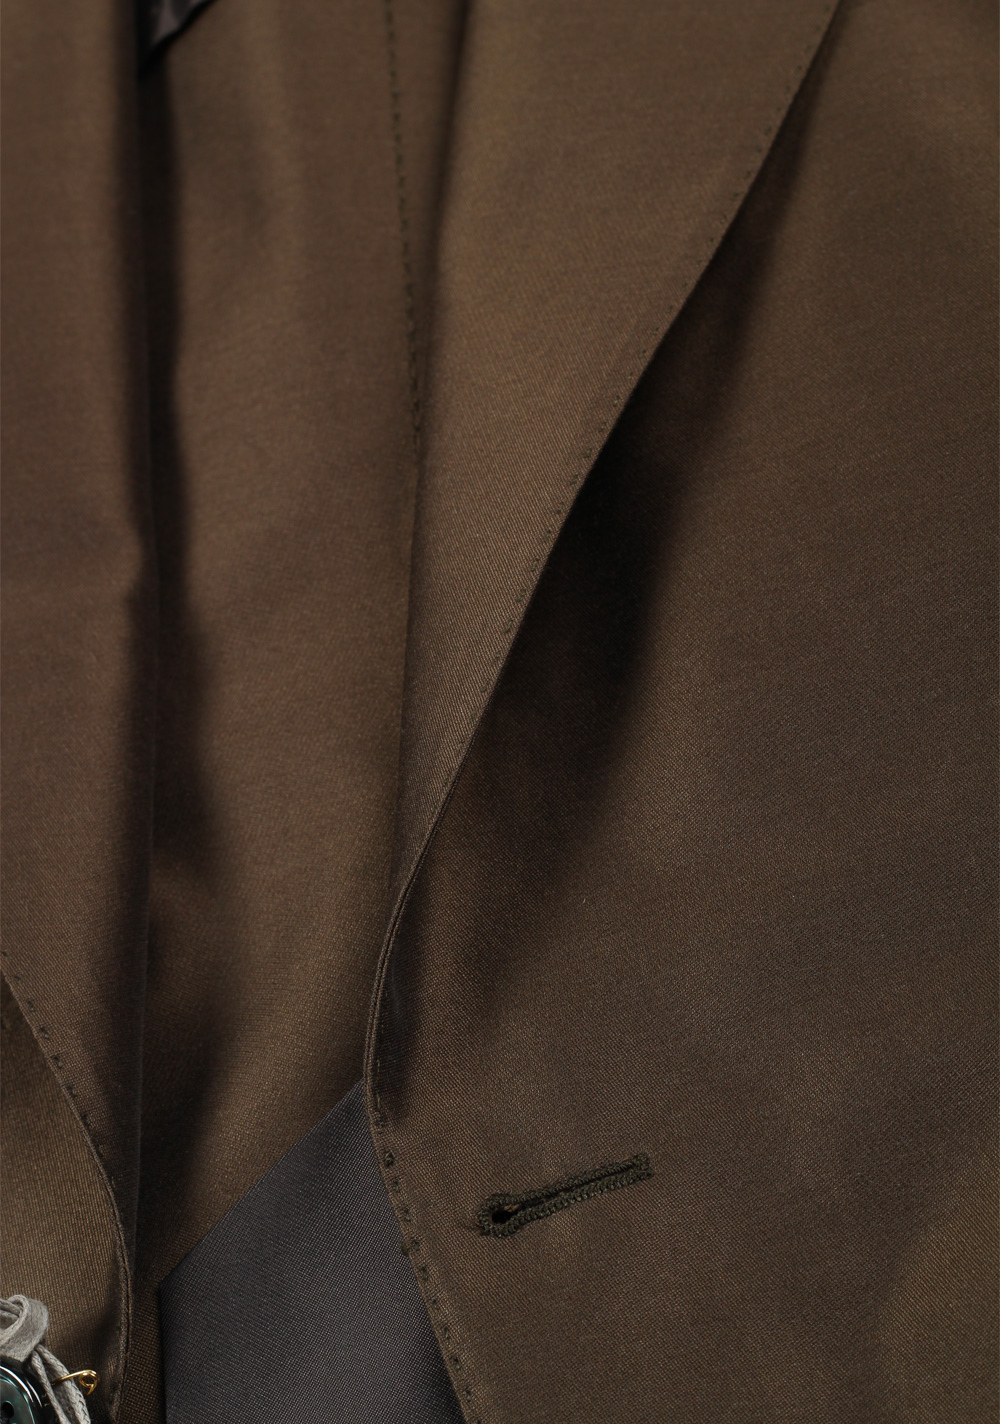 TOM FORD Atticus Brown  Sport Coat Size 46 / 36R U.S. | Costume Limité